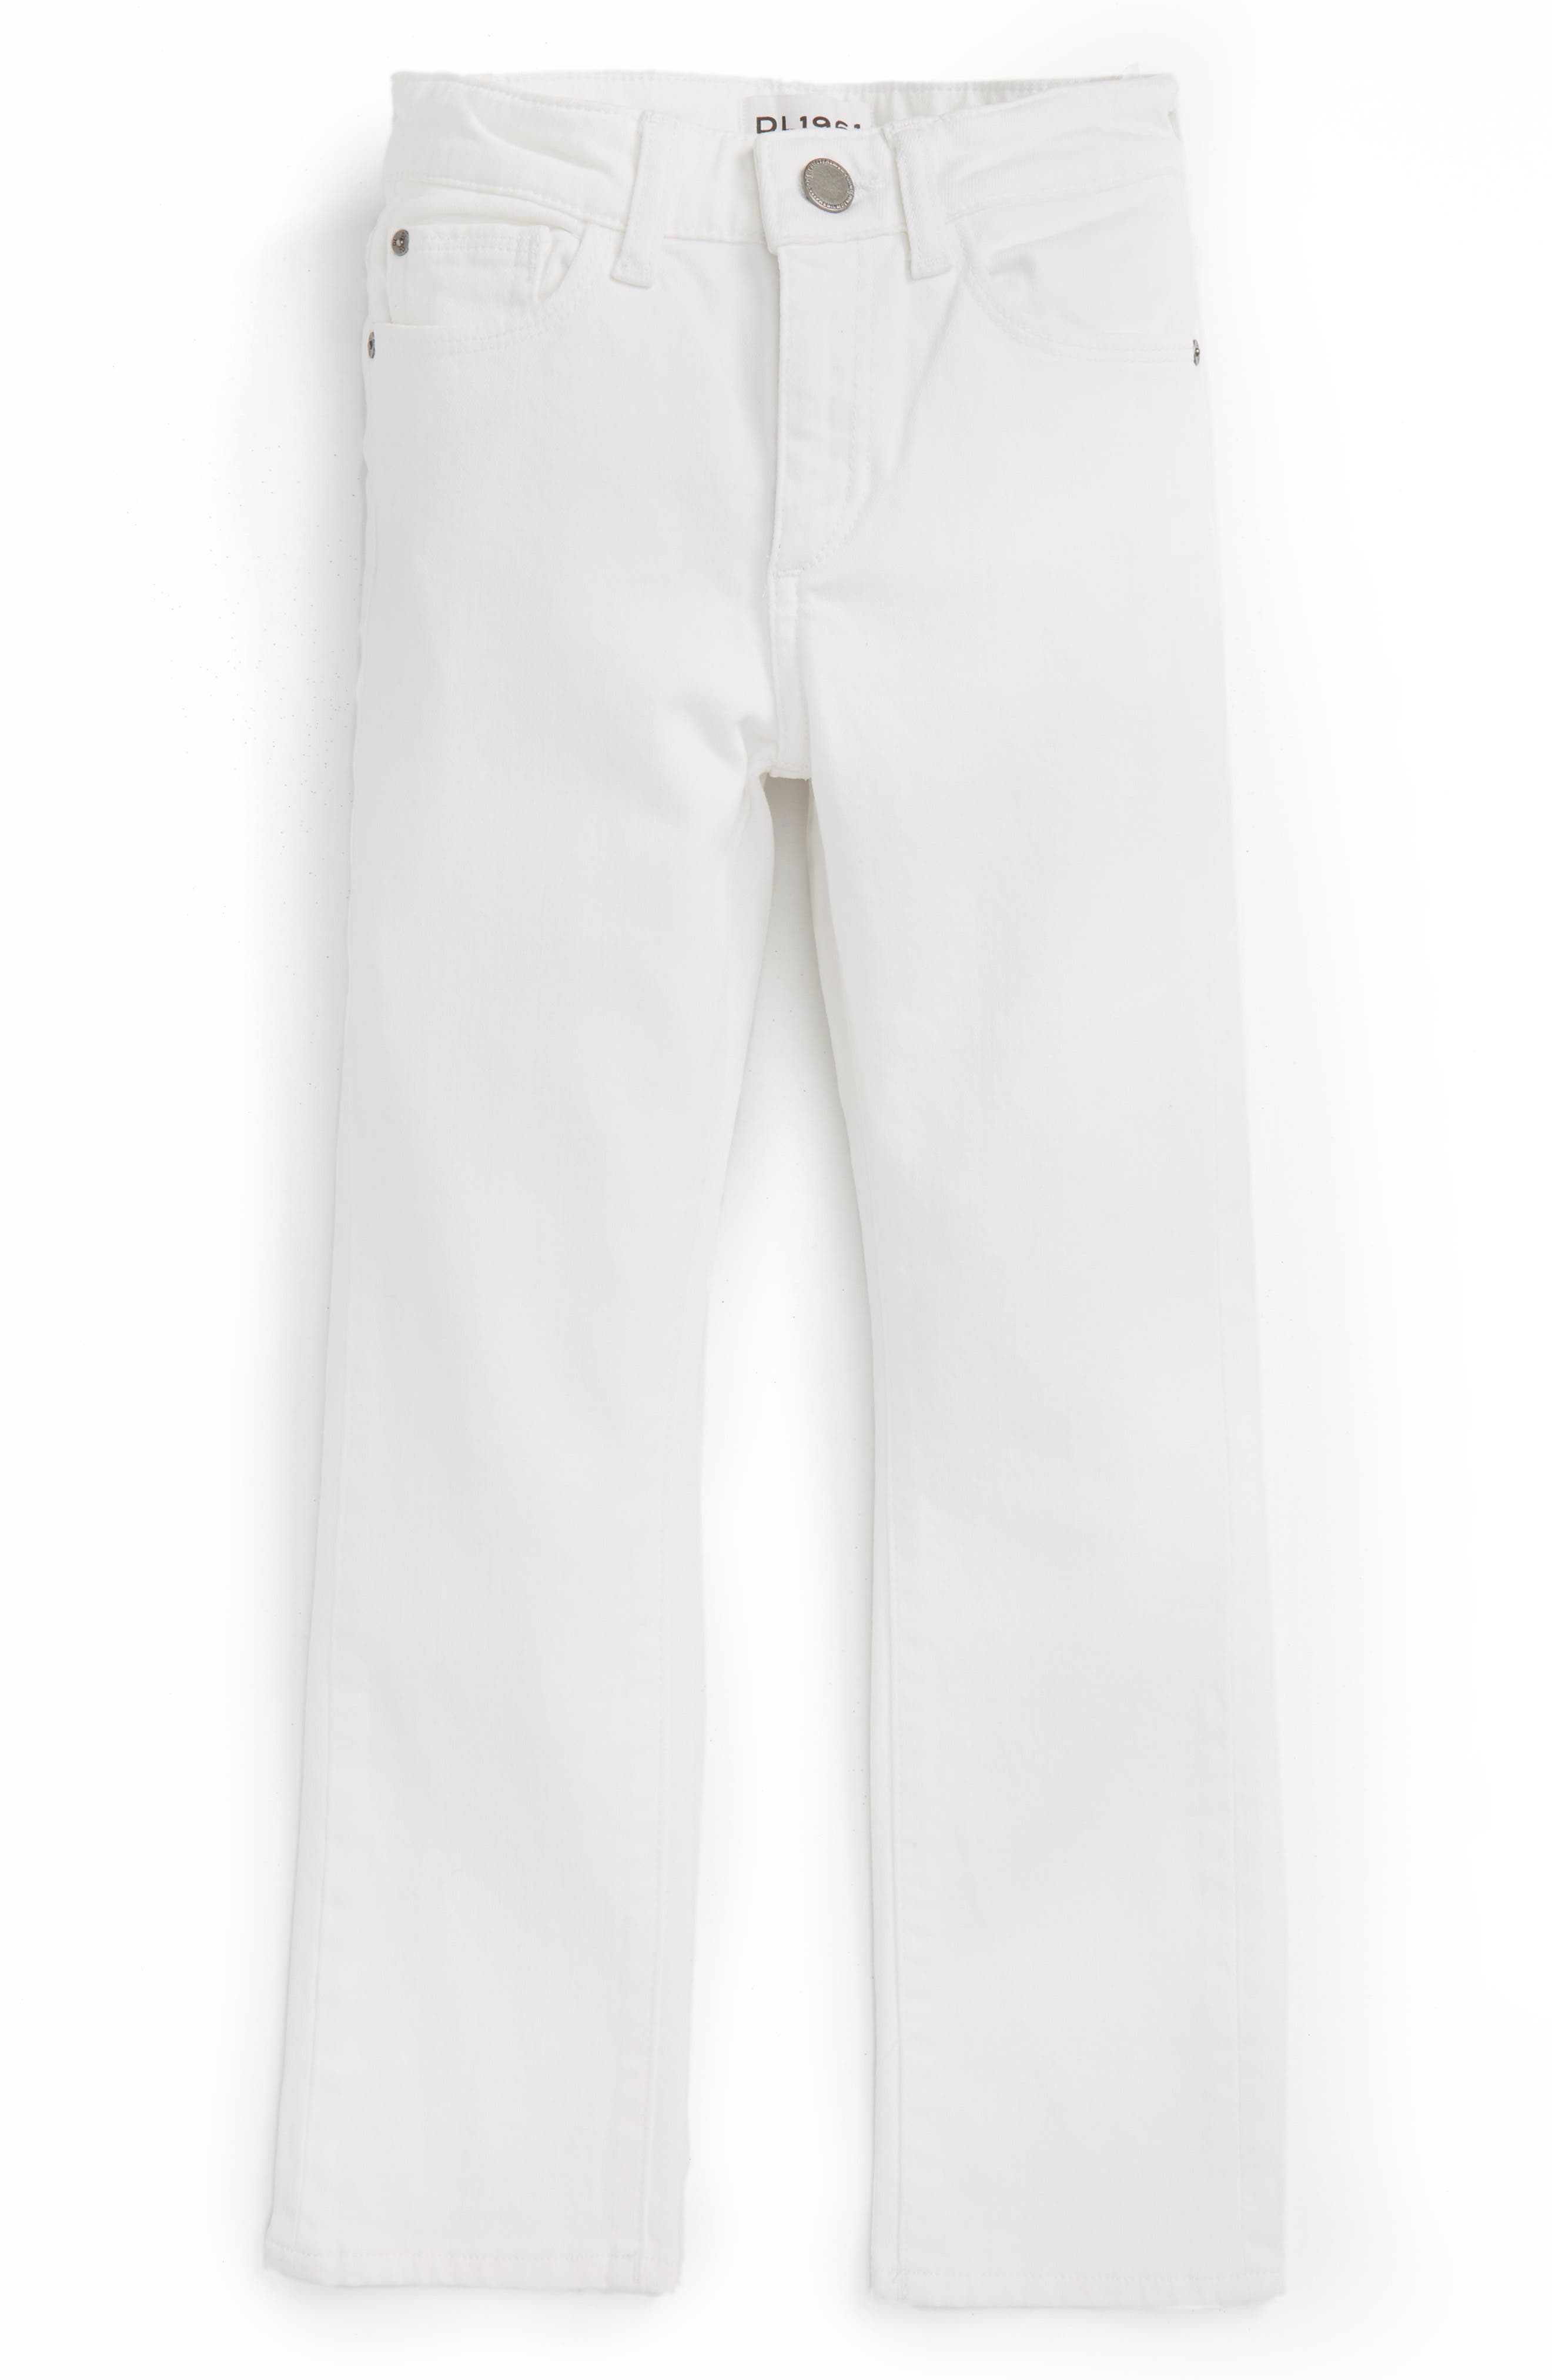 boys white jeans size 6